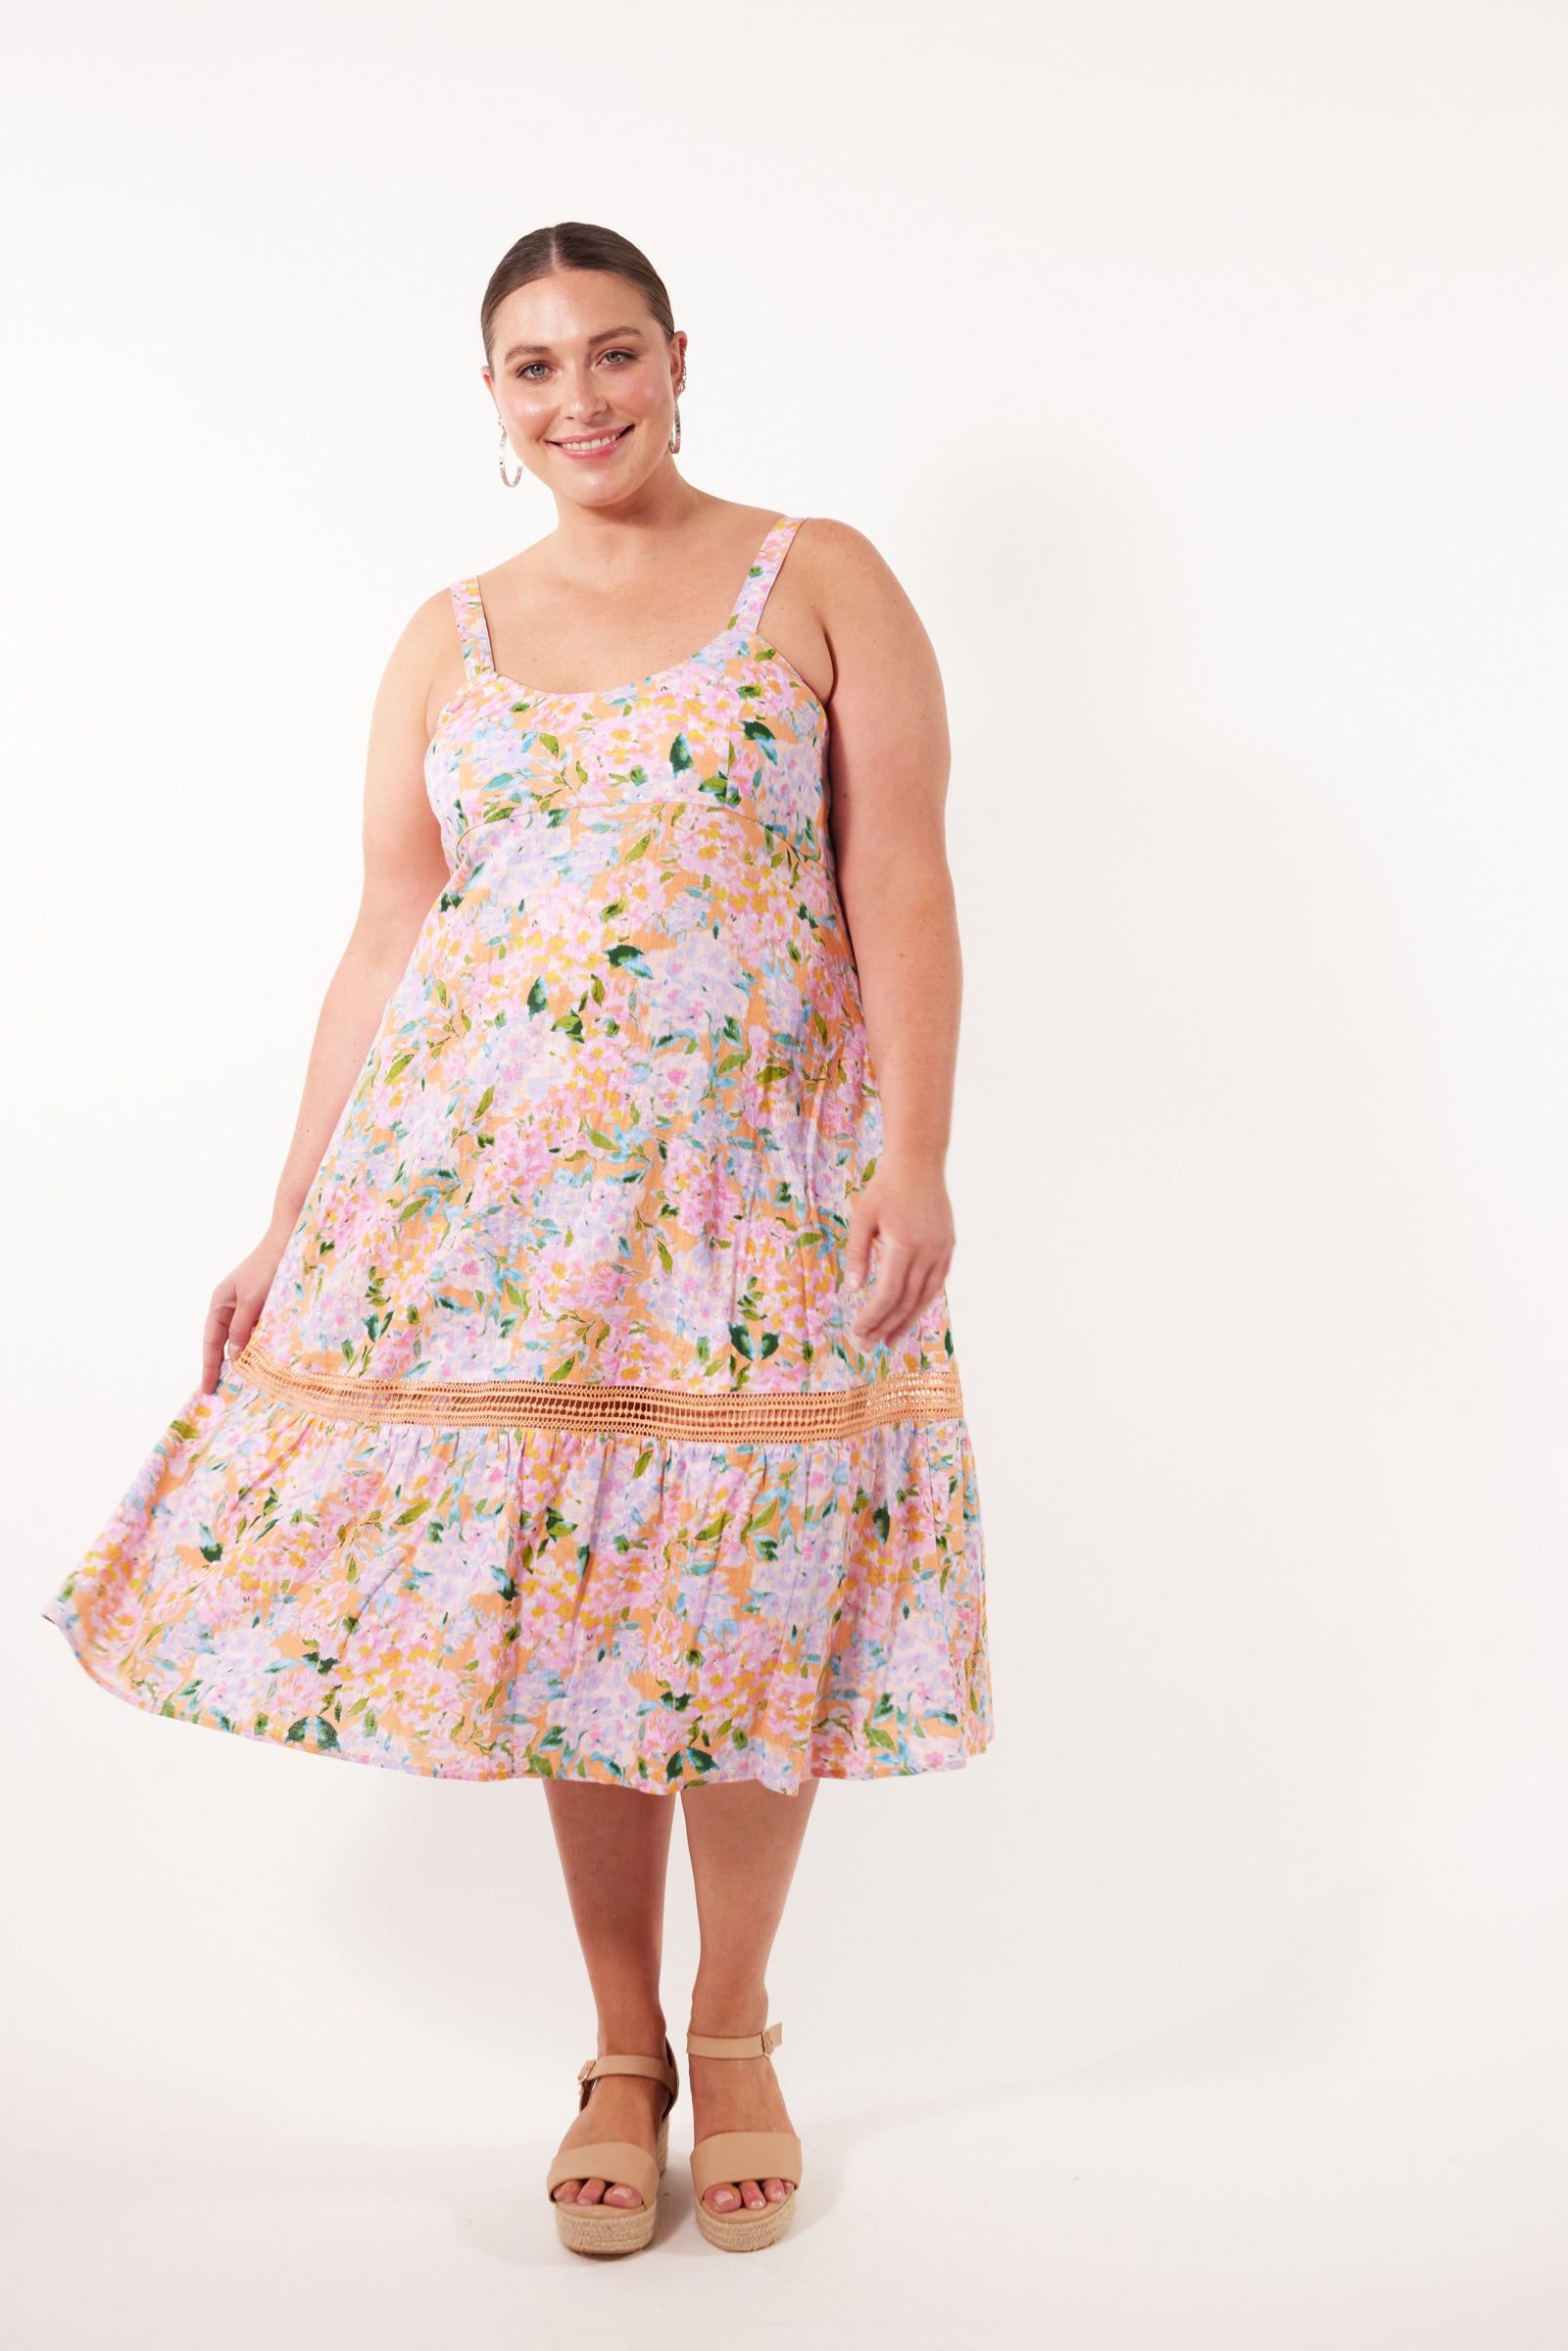 Flora Tank Dress - Sunset Hydrangea - Isle of Mine Clothing - Dress Strappy Maxi